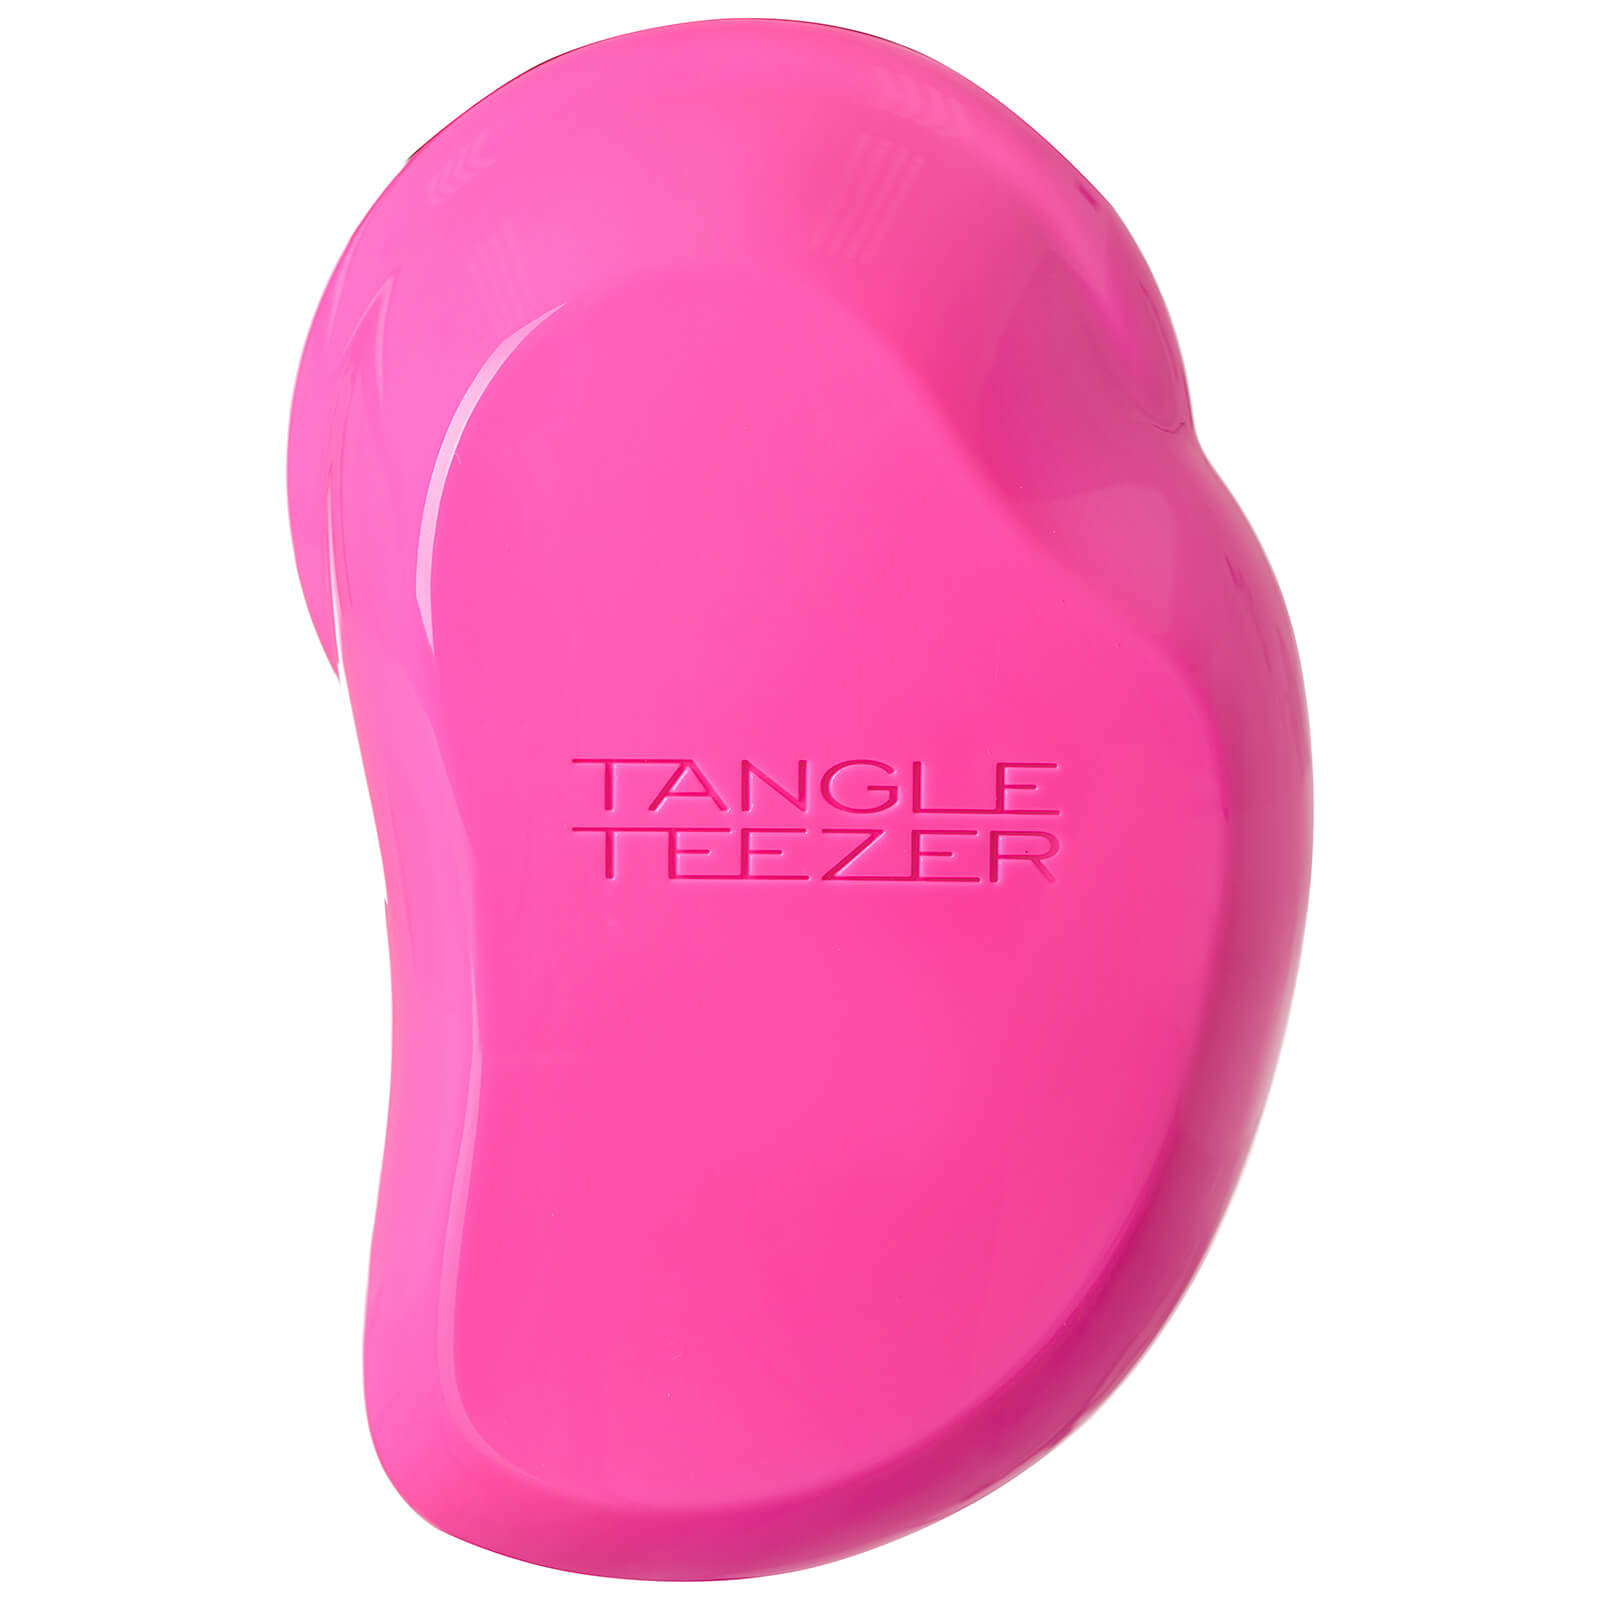 Cepillo para el pelo The Original Detangling de Tangle Teezer - Pink Rebel